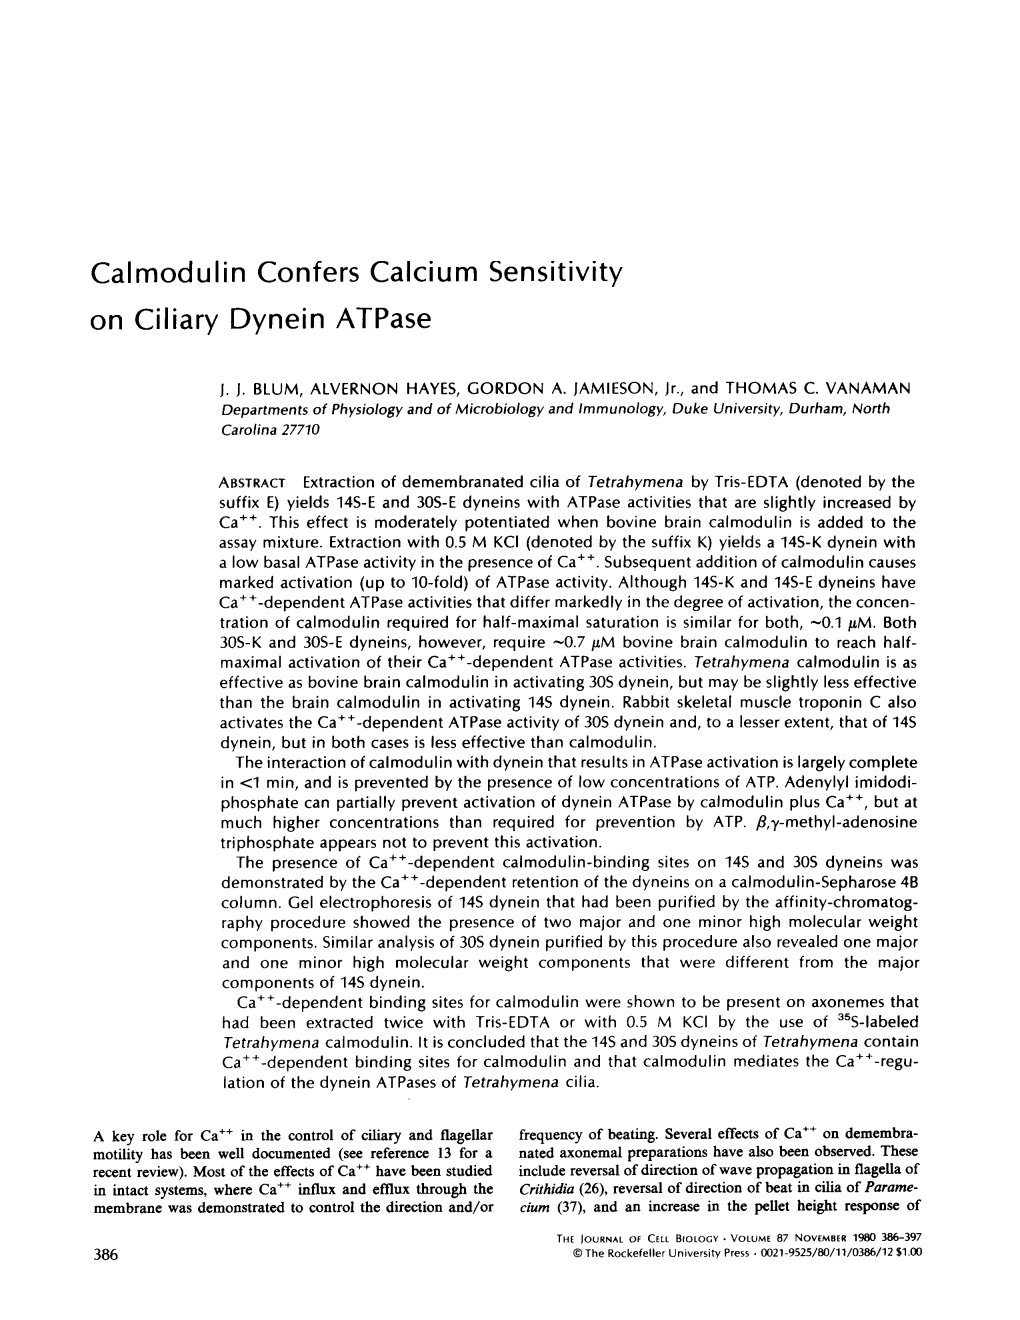 Calmodulin Confers Calcium Sensitivity on Ciiiary Dynein Atpase